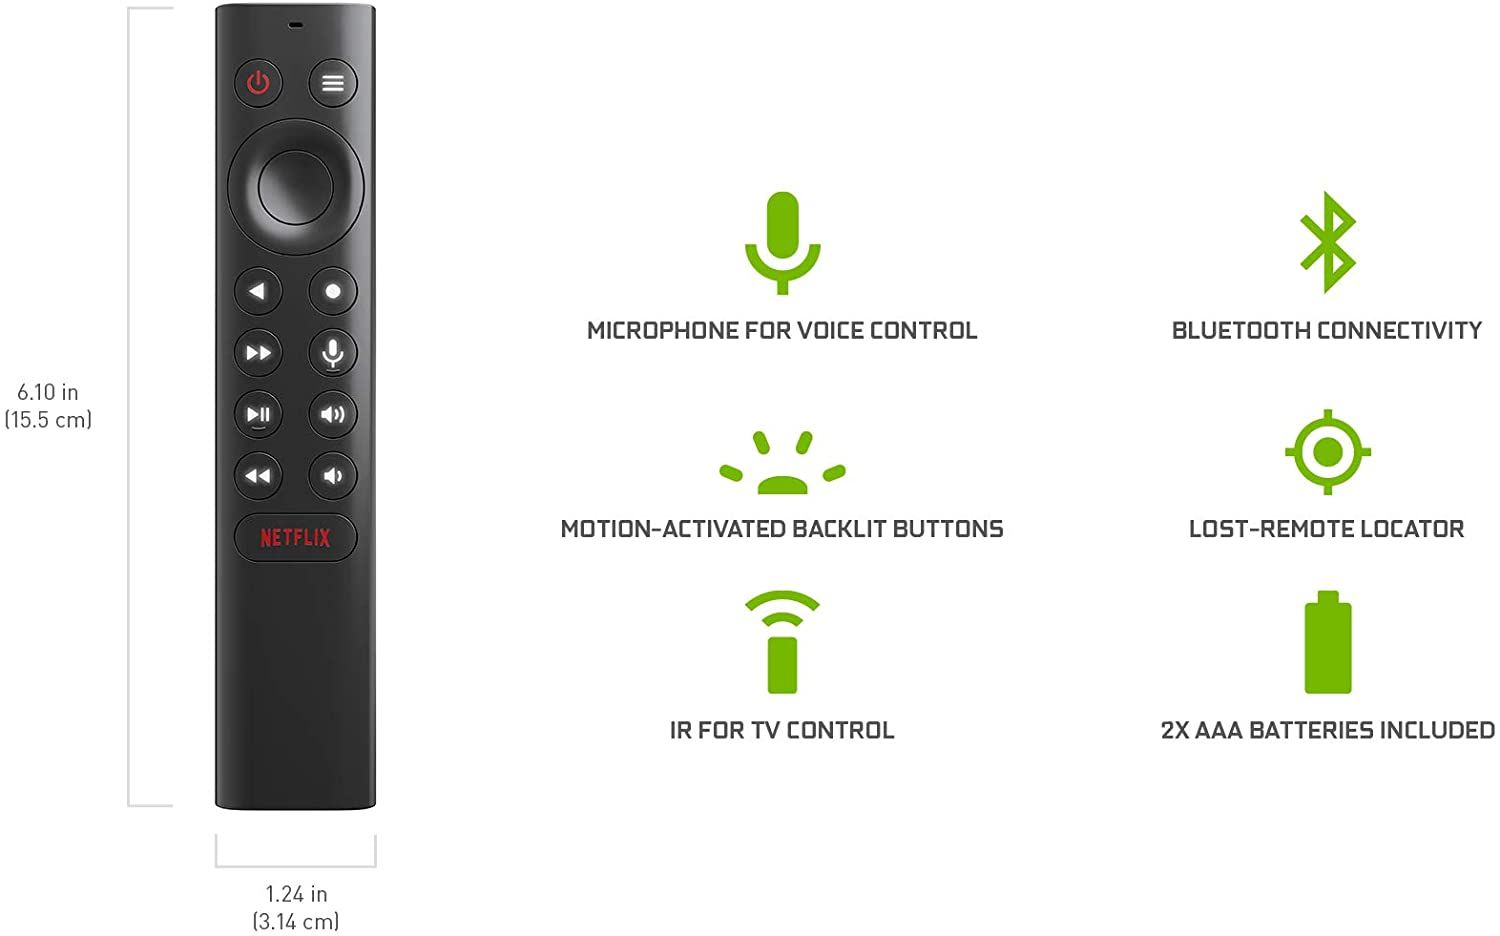 NVIDIA SHIELD Android TV 4K remote